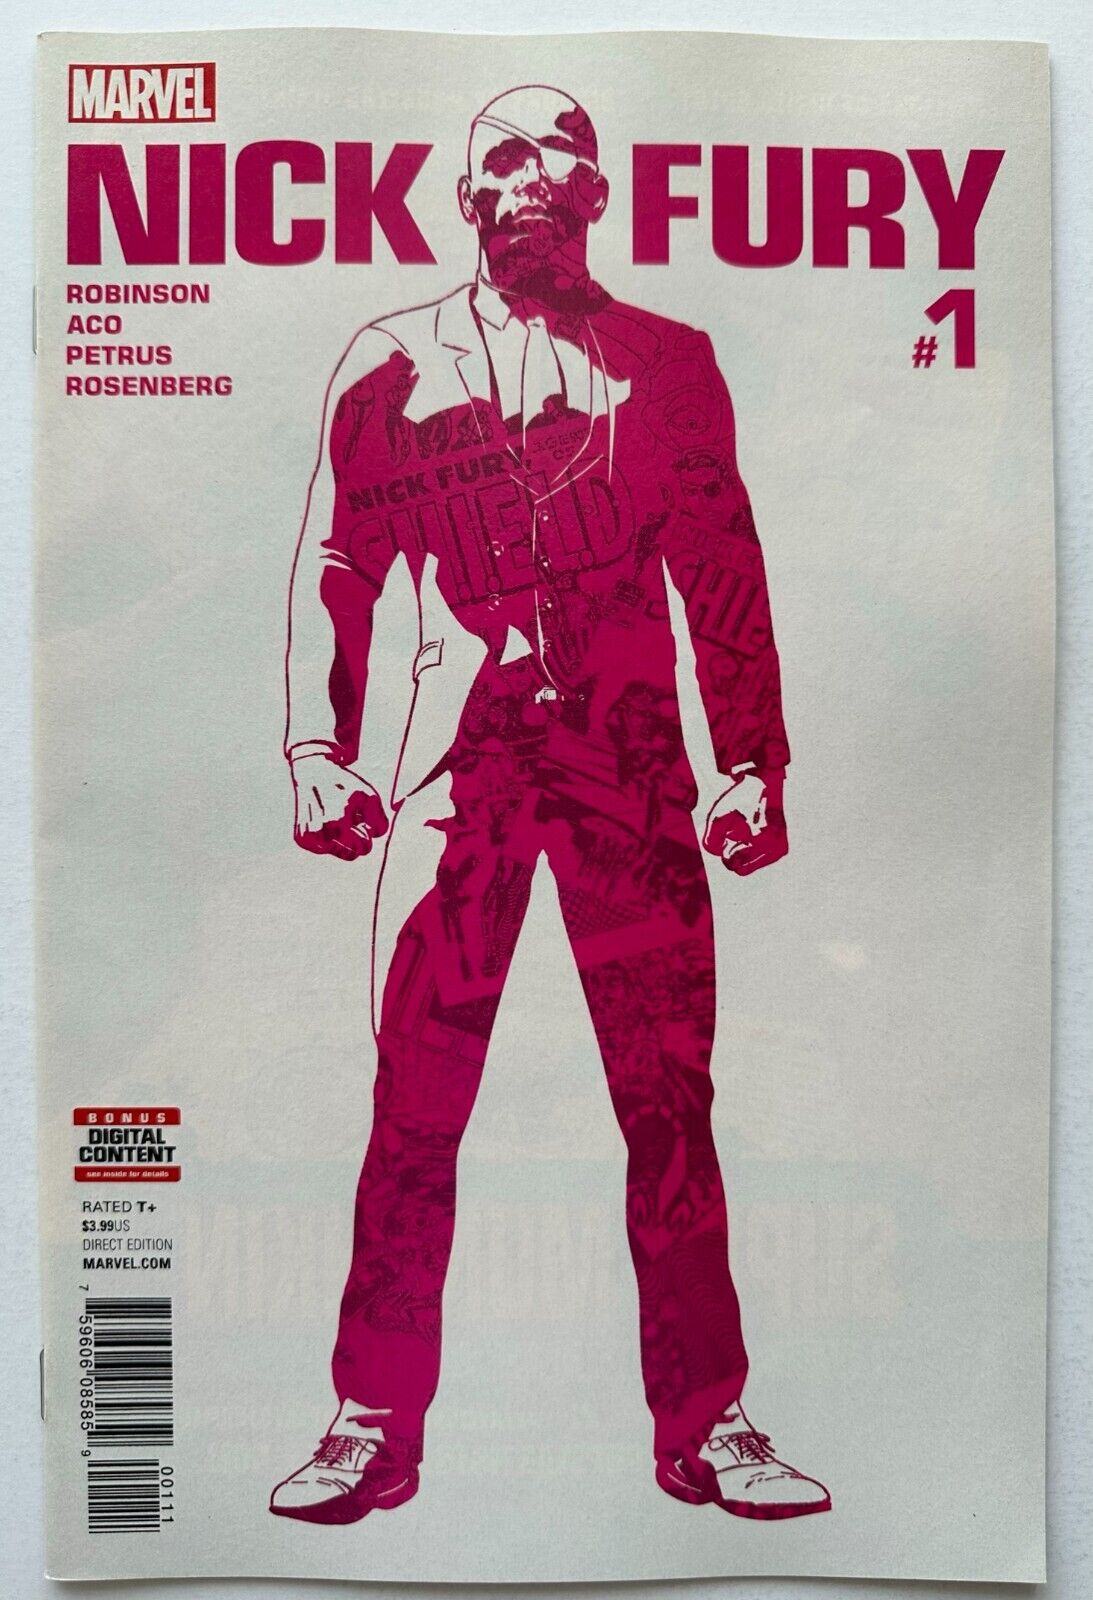 NICK FURY #1 (NM), Marvel 2017, First Printing, Robinson/Aco